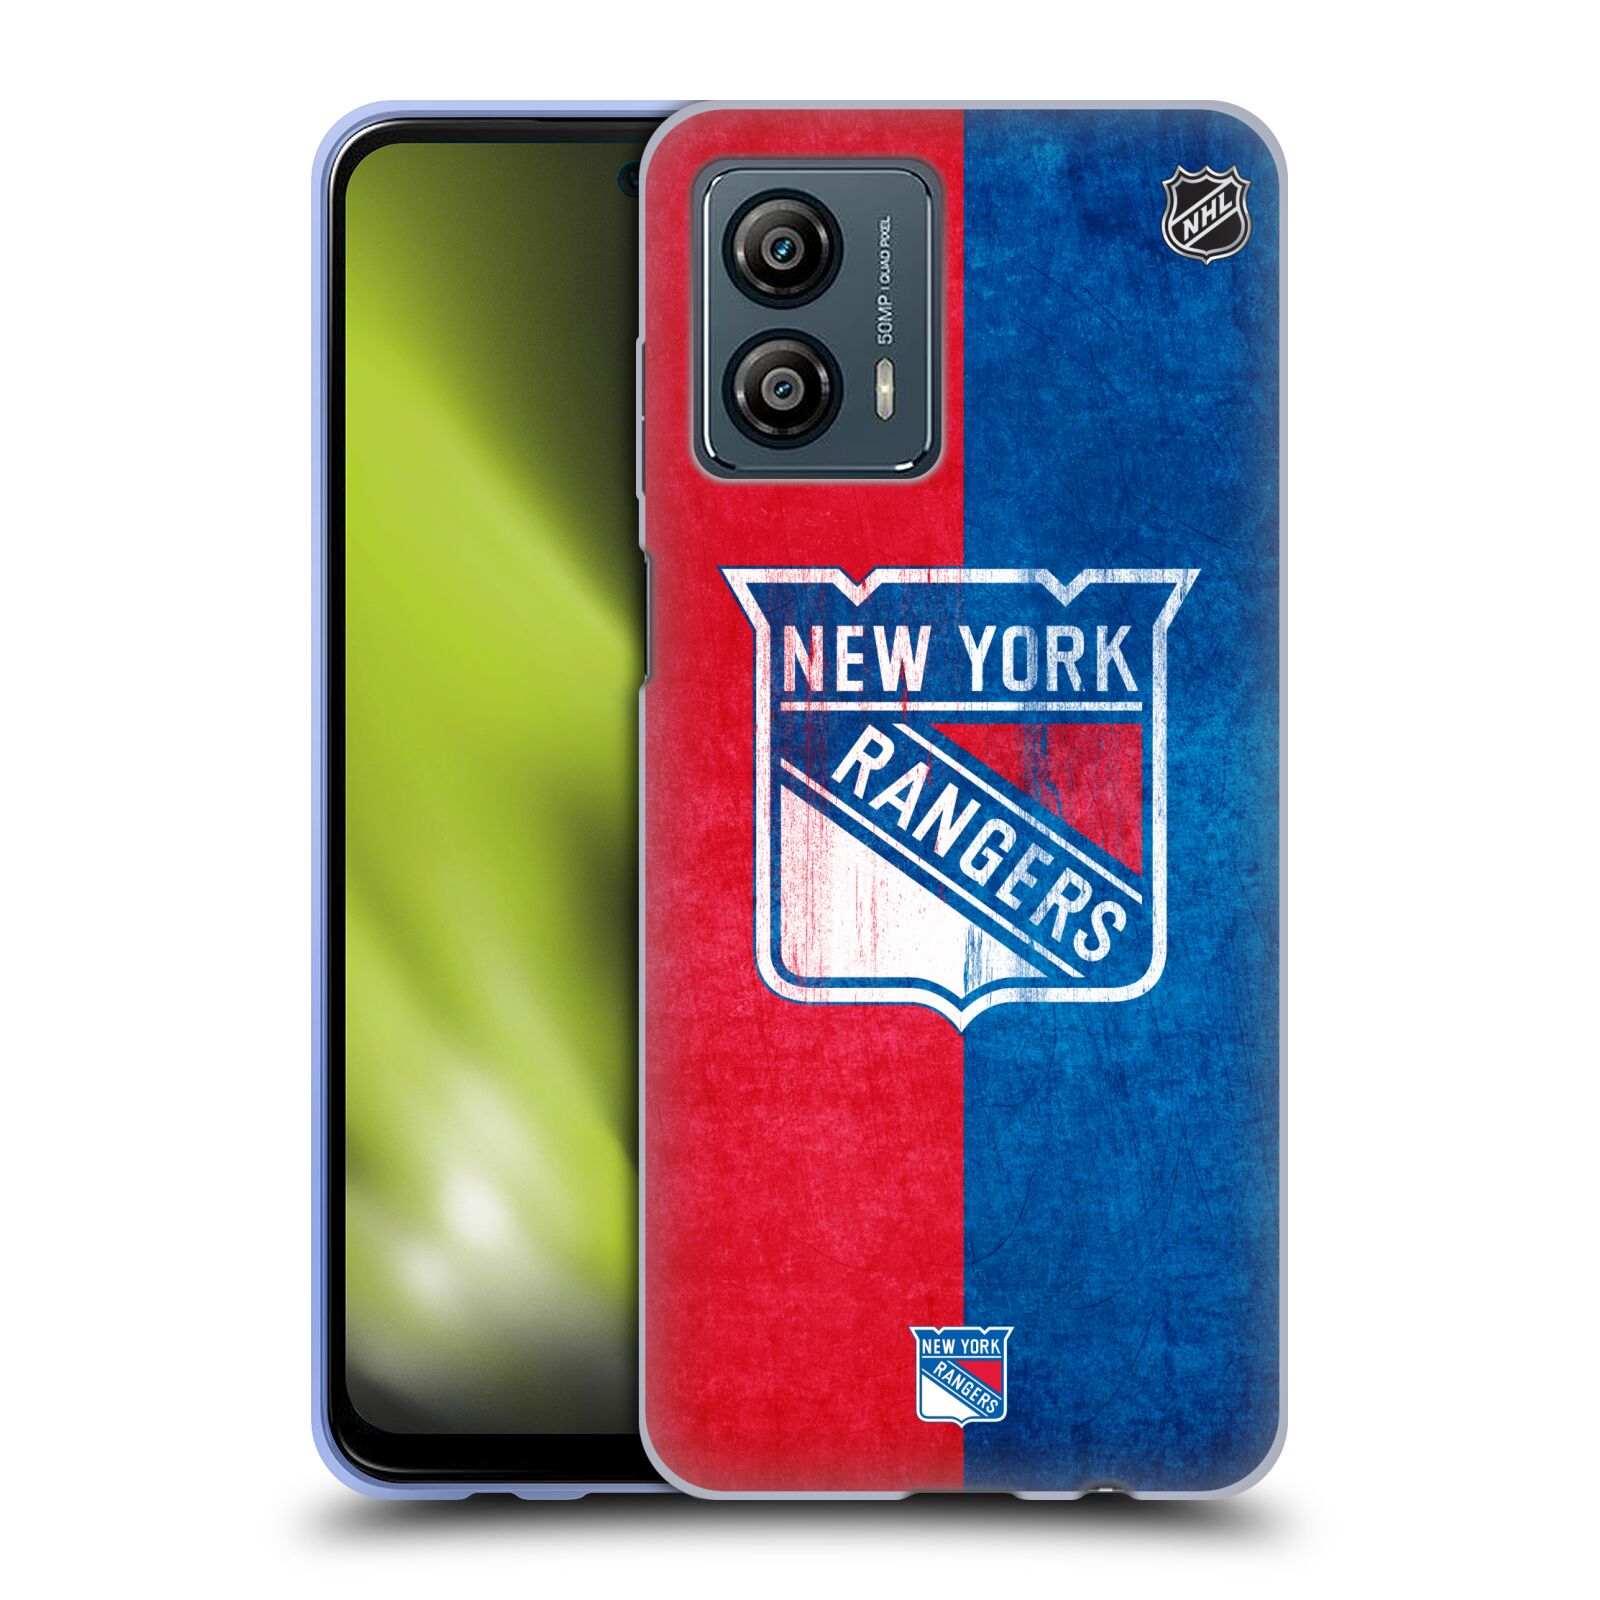 Silikonové pouzdro na mobil Motorola Moto G53 5G - NHL - Půlené logo New York Rangers (Silikonový kryt, obal, pouzdro na mobilní telefon Motorola Moto G53 5G s licencovaným motivem NHL - Půlené logo New York Rangers)